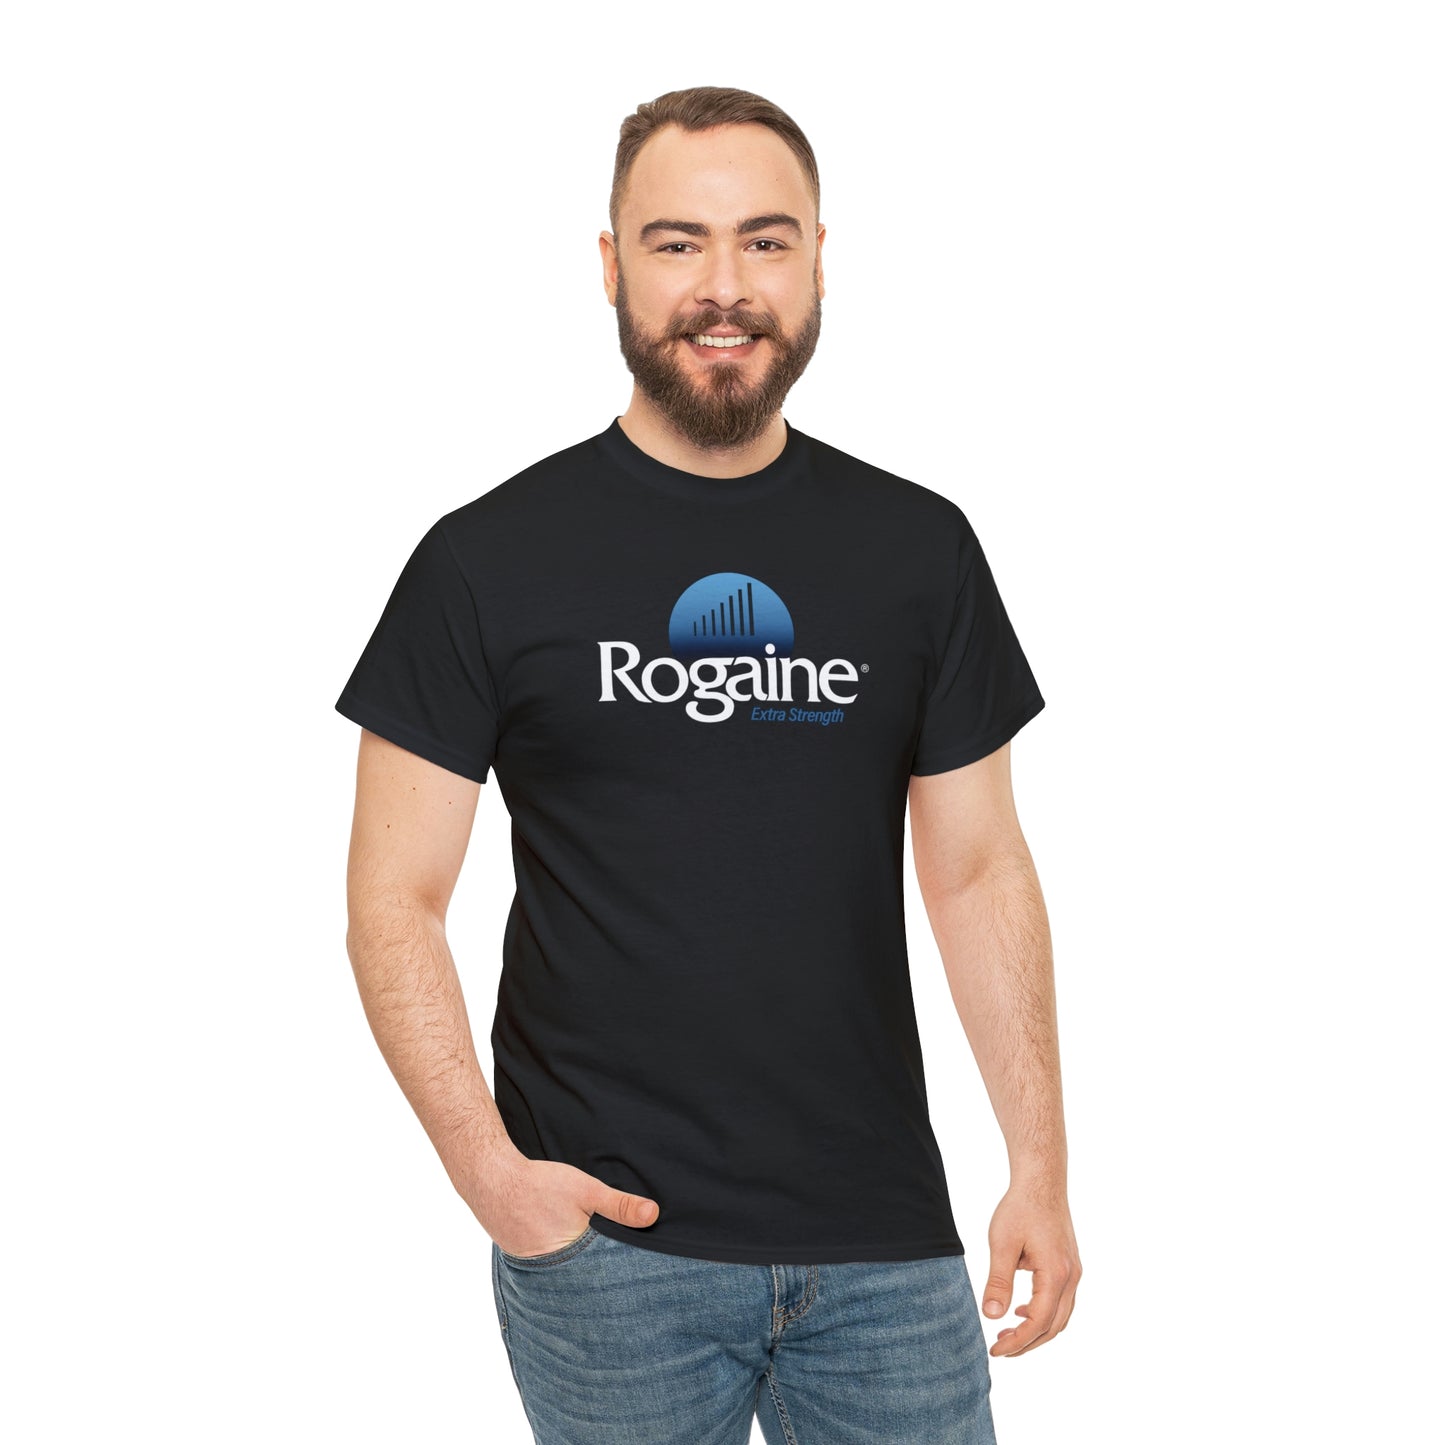 Rogaine T-Shirt